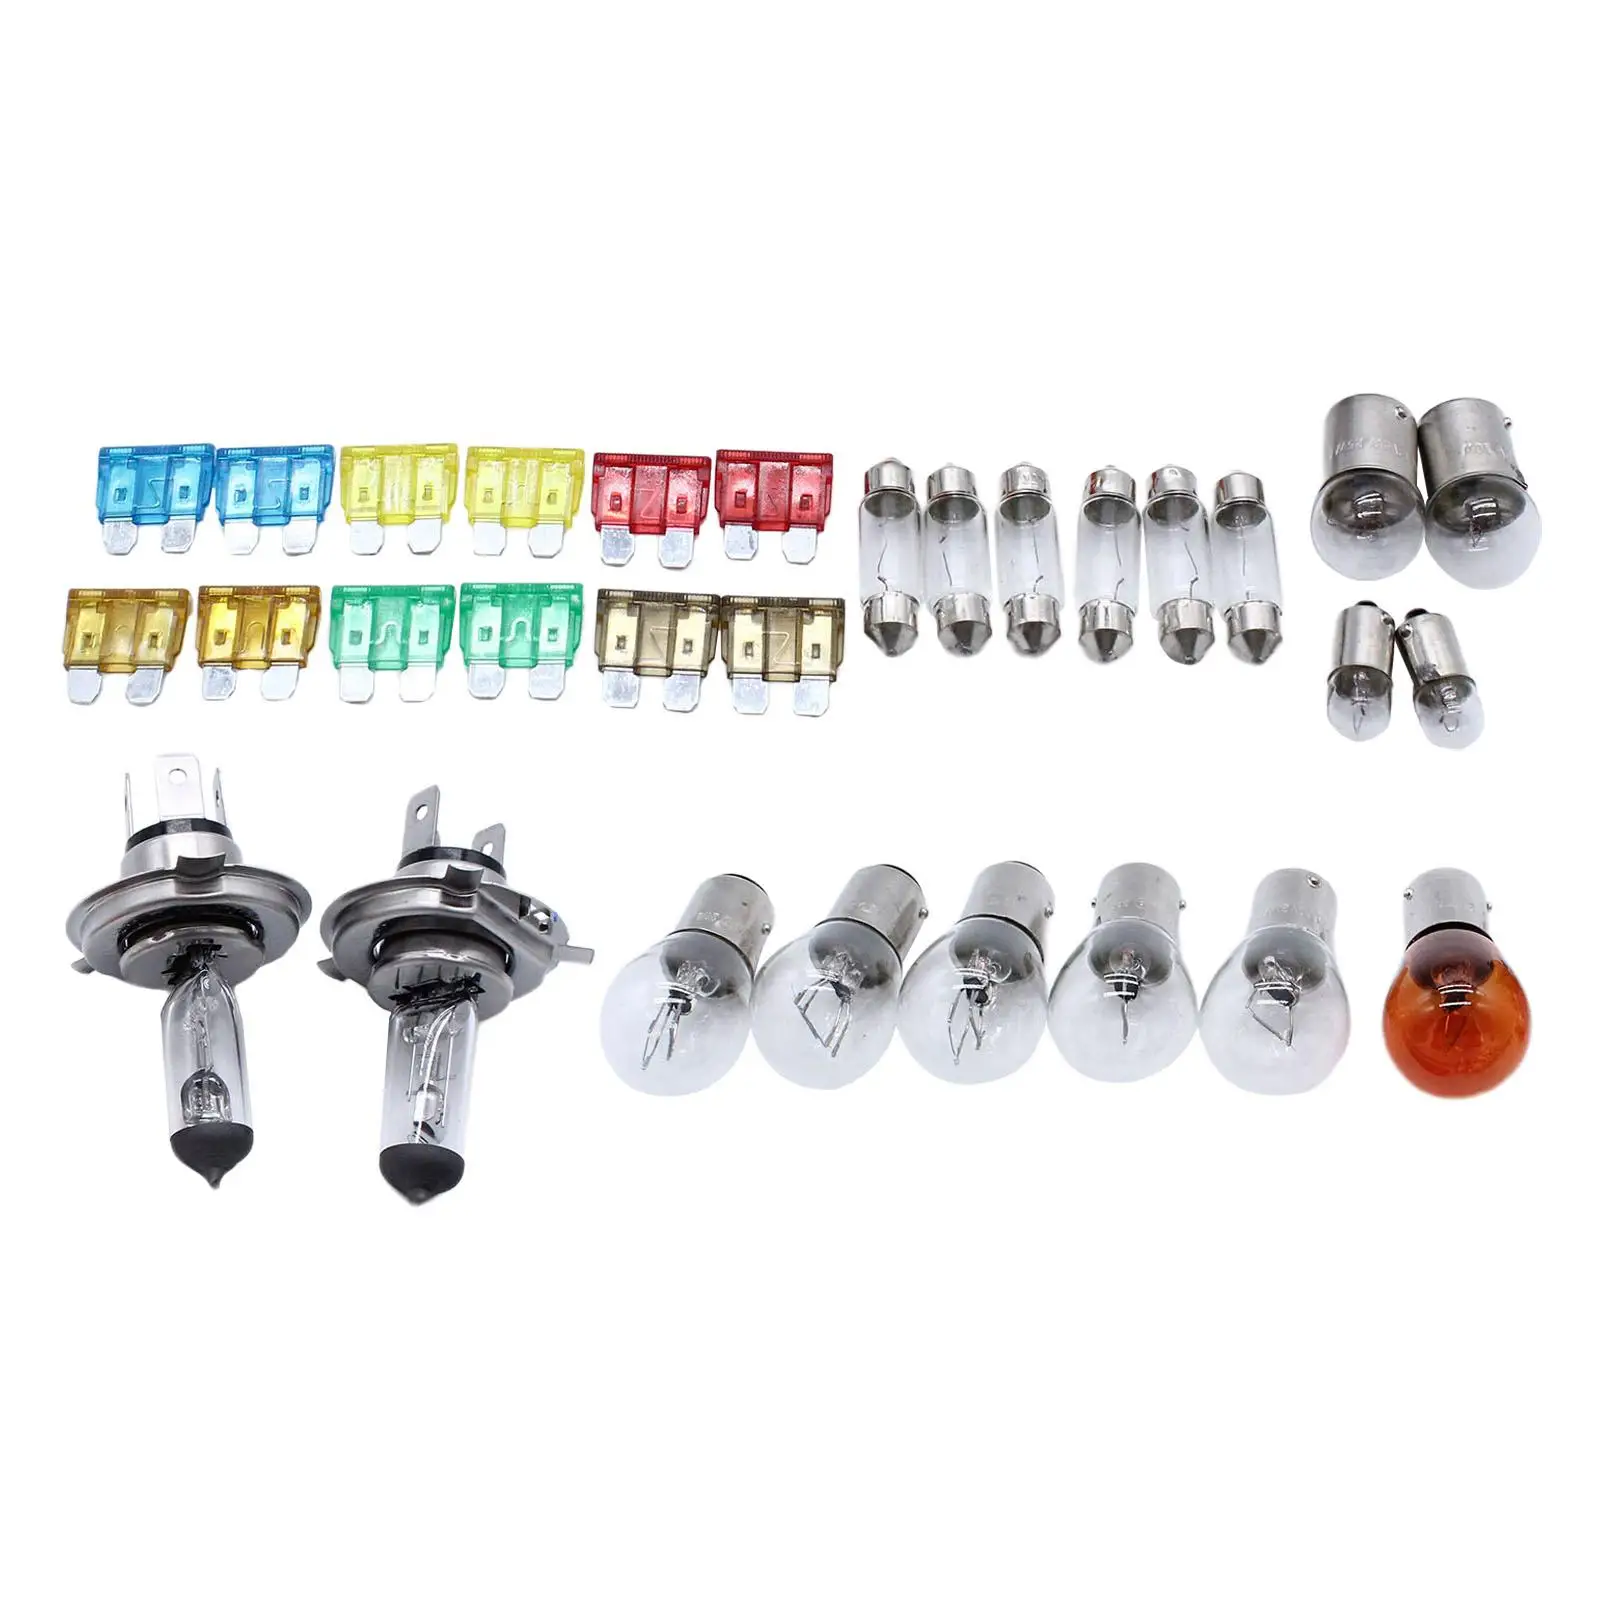 30 Pieces H4 Light Bulb Kit Set Automotive Headlight Bulbs Kit Spares Parts Fit for Cars